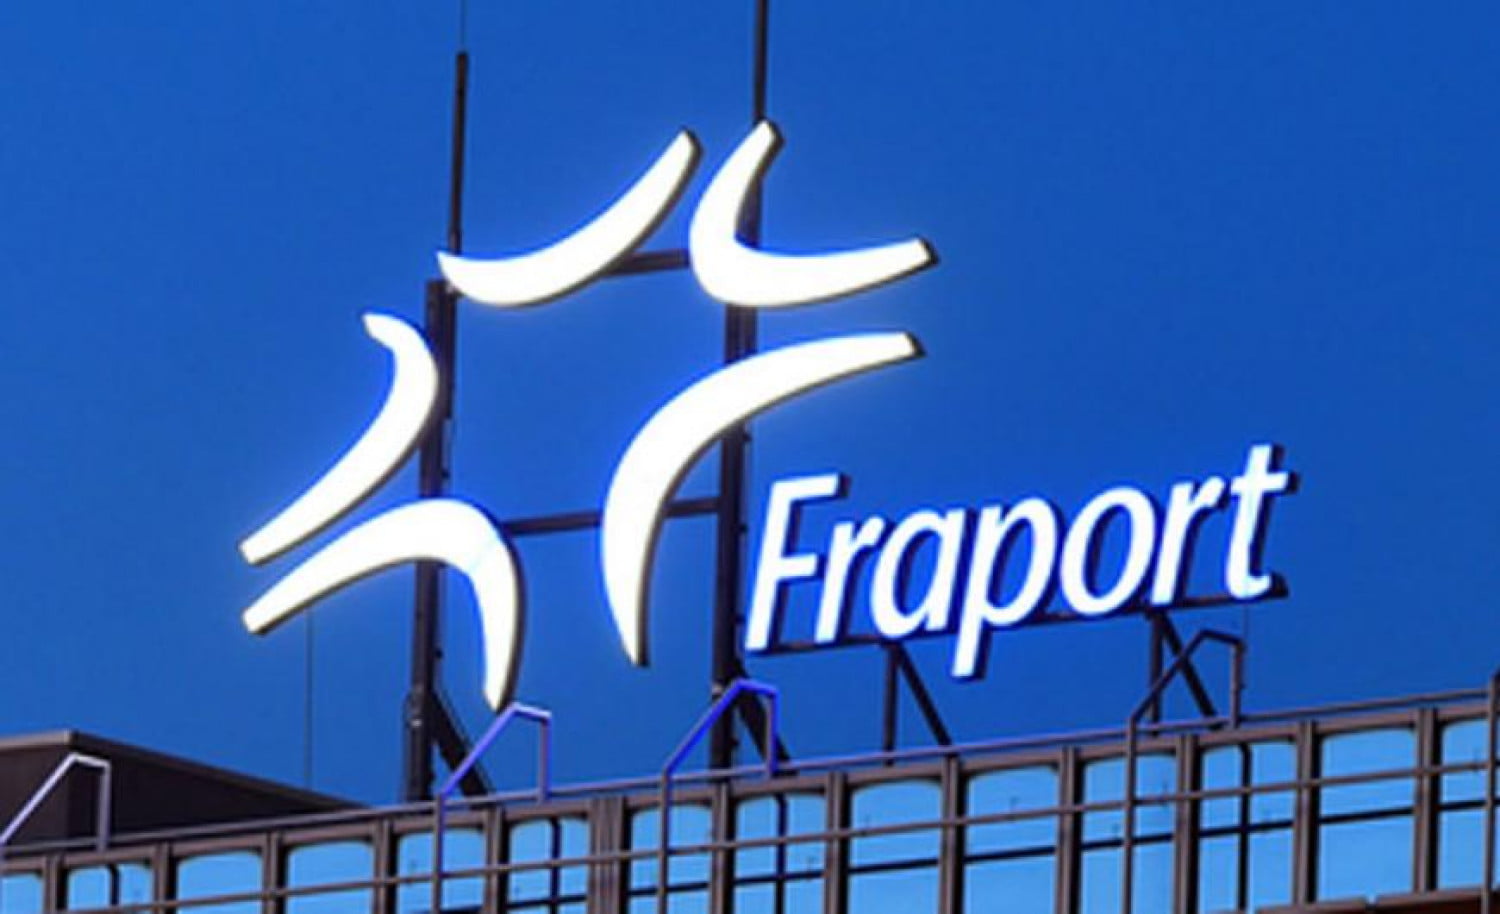 Fraport: Που θα προσληφθούν υπάλληλοι έξι ειδικοτήτων